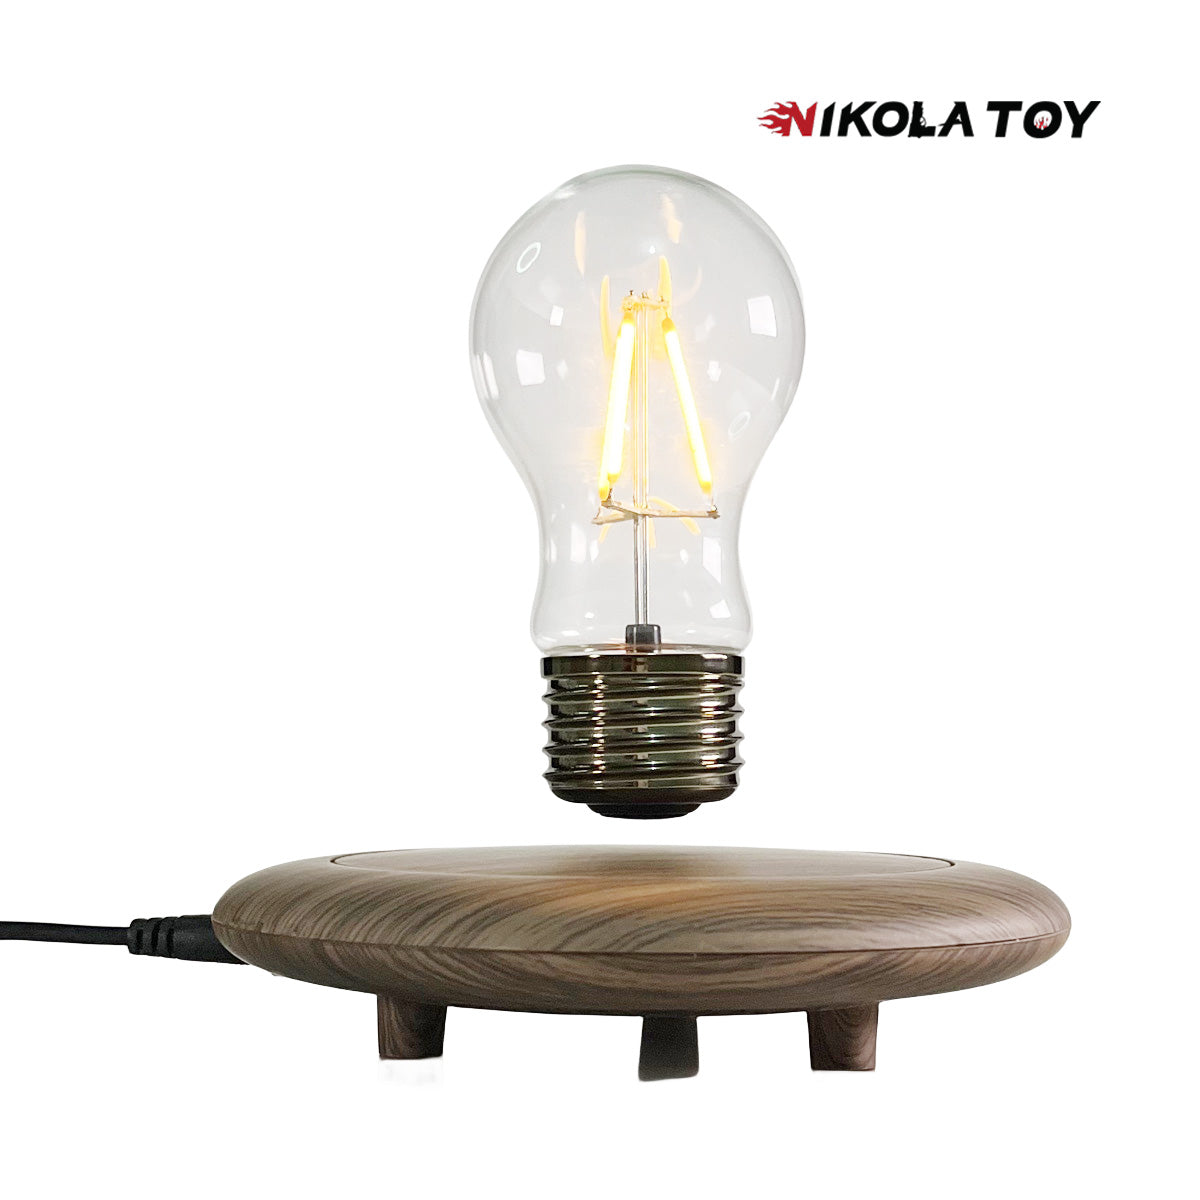 High tech desktop ornaments - suspended lights - Nikola Toy